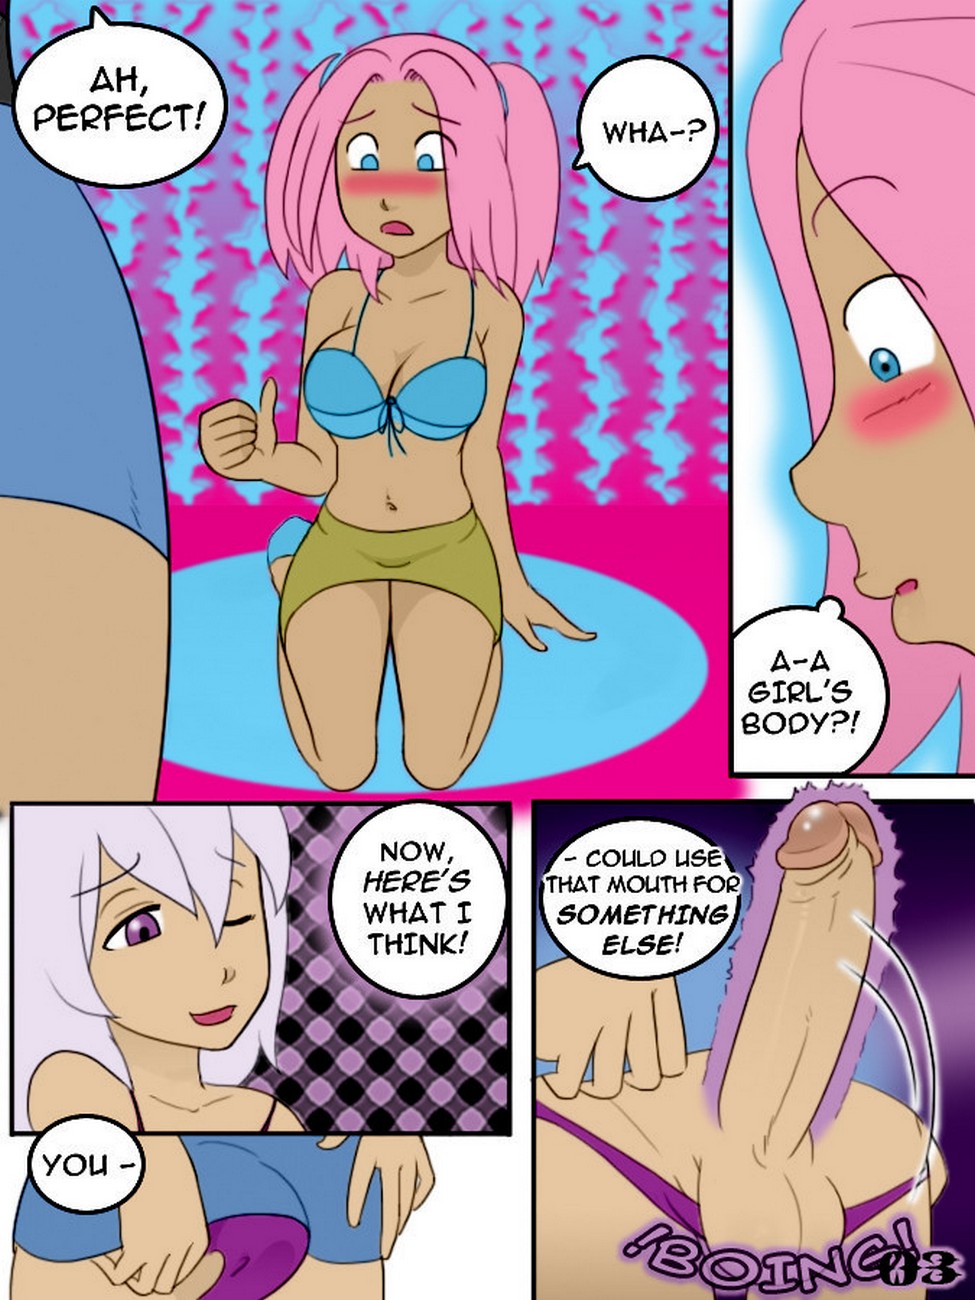 MyHentaiGallery - Free Hentai, Porn Comics and Cartoon Sex.